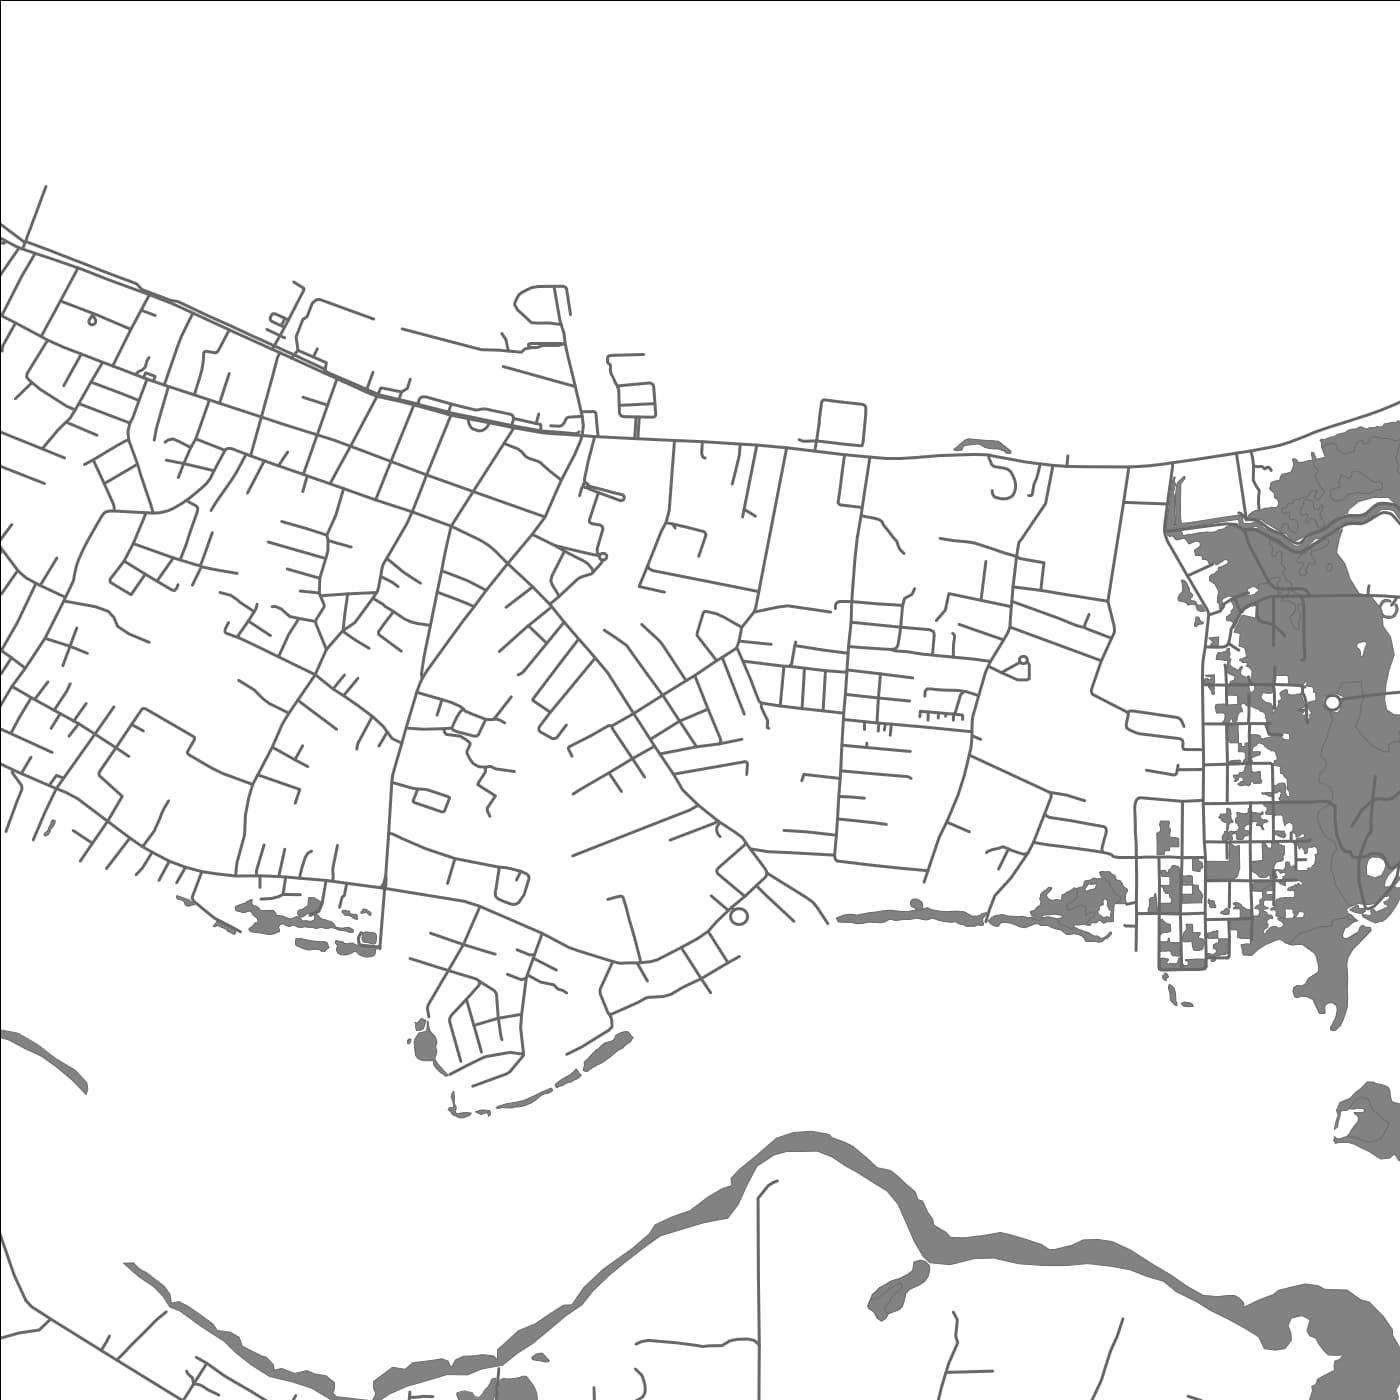 ROAD MAP OF HOUMAKELIKAO, TONGA BY MAPBAKES